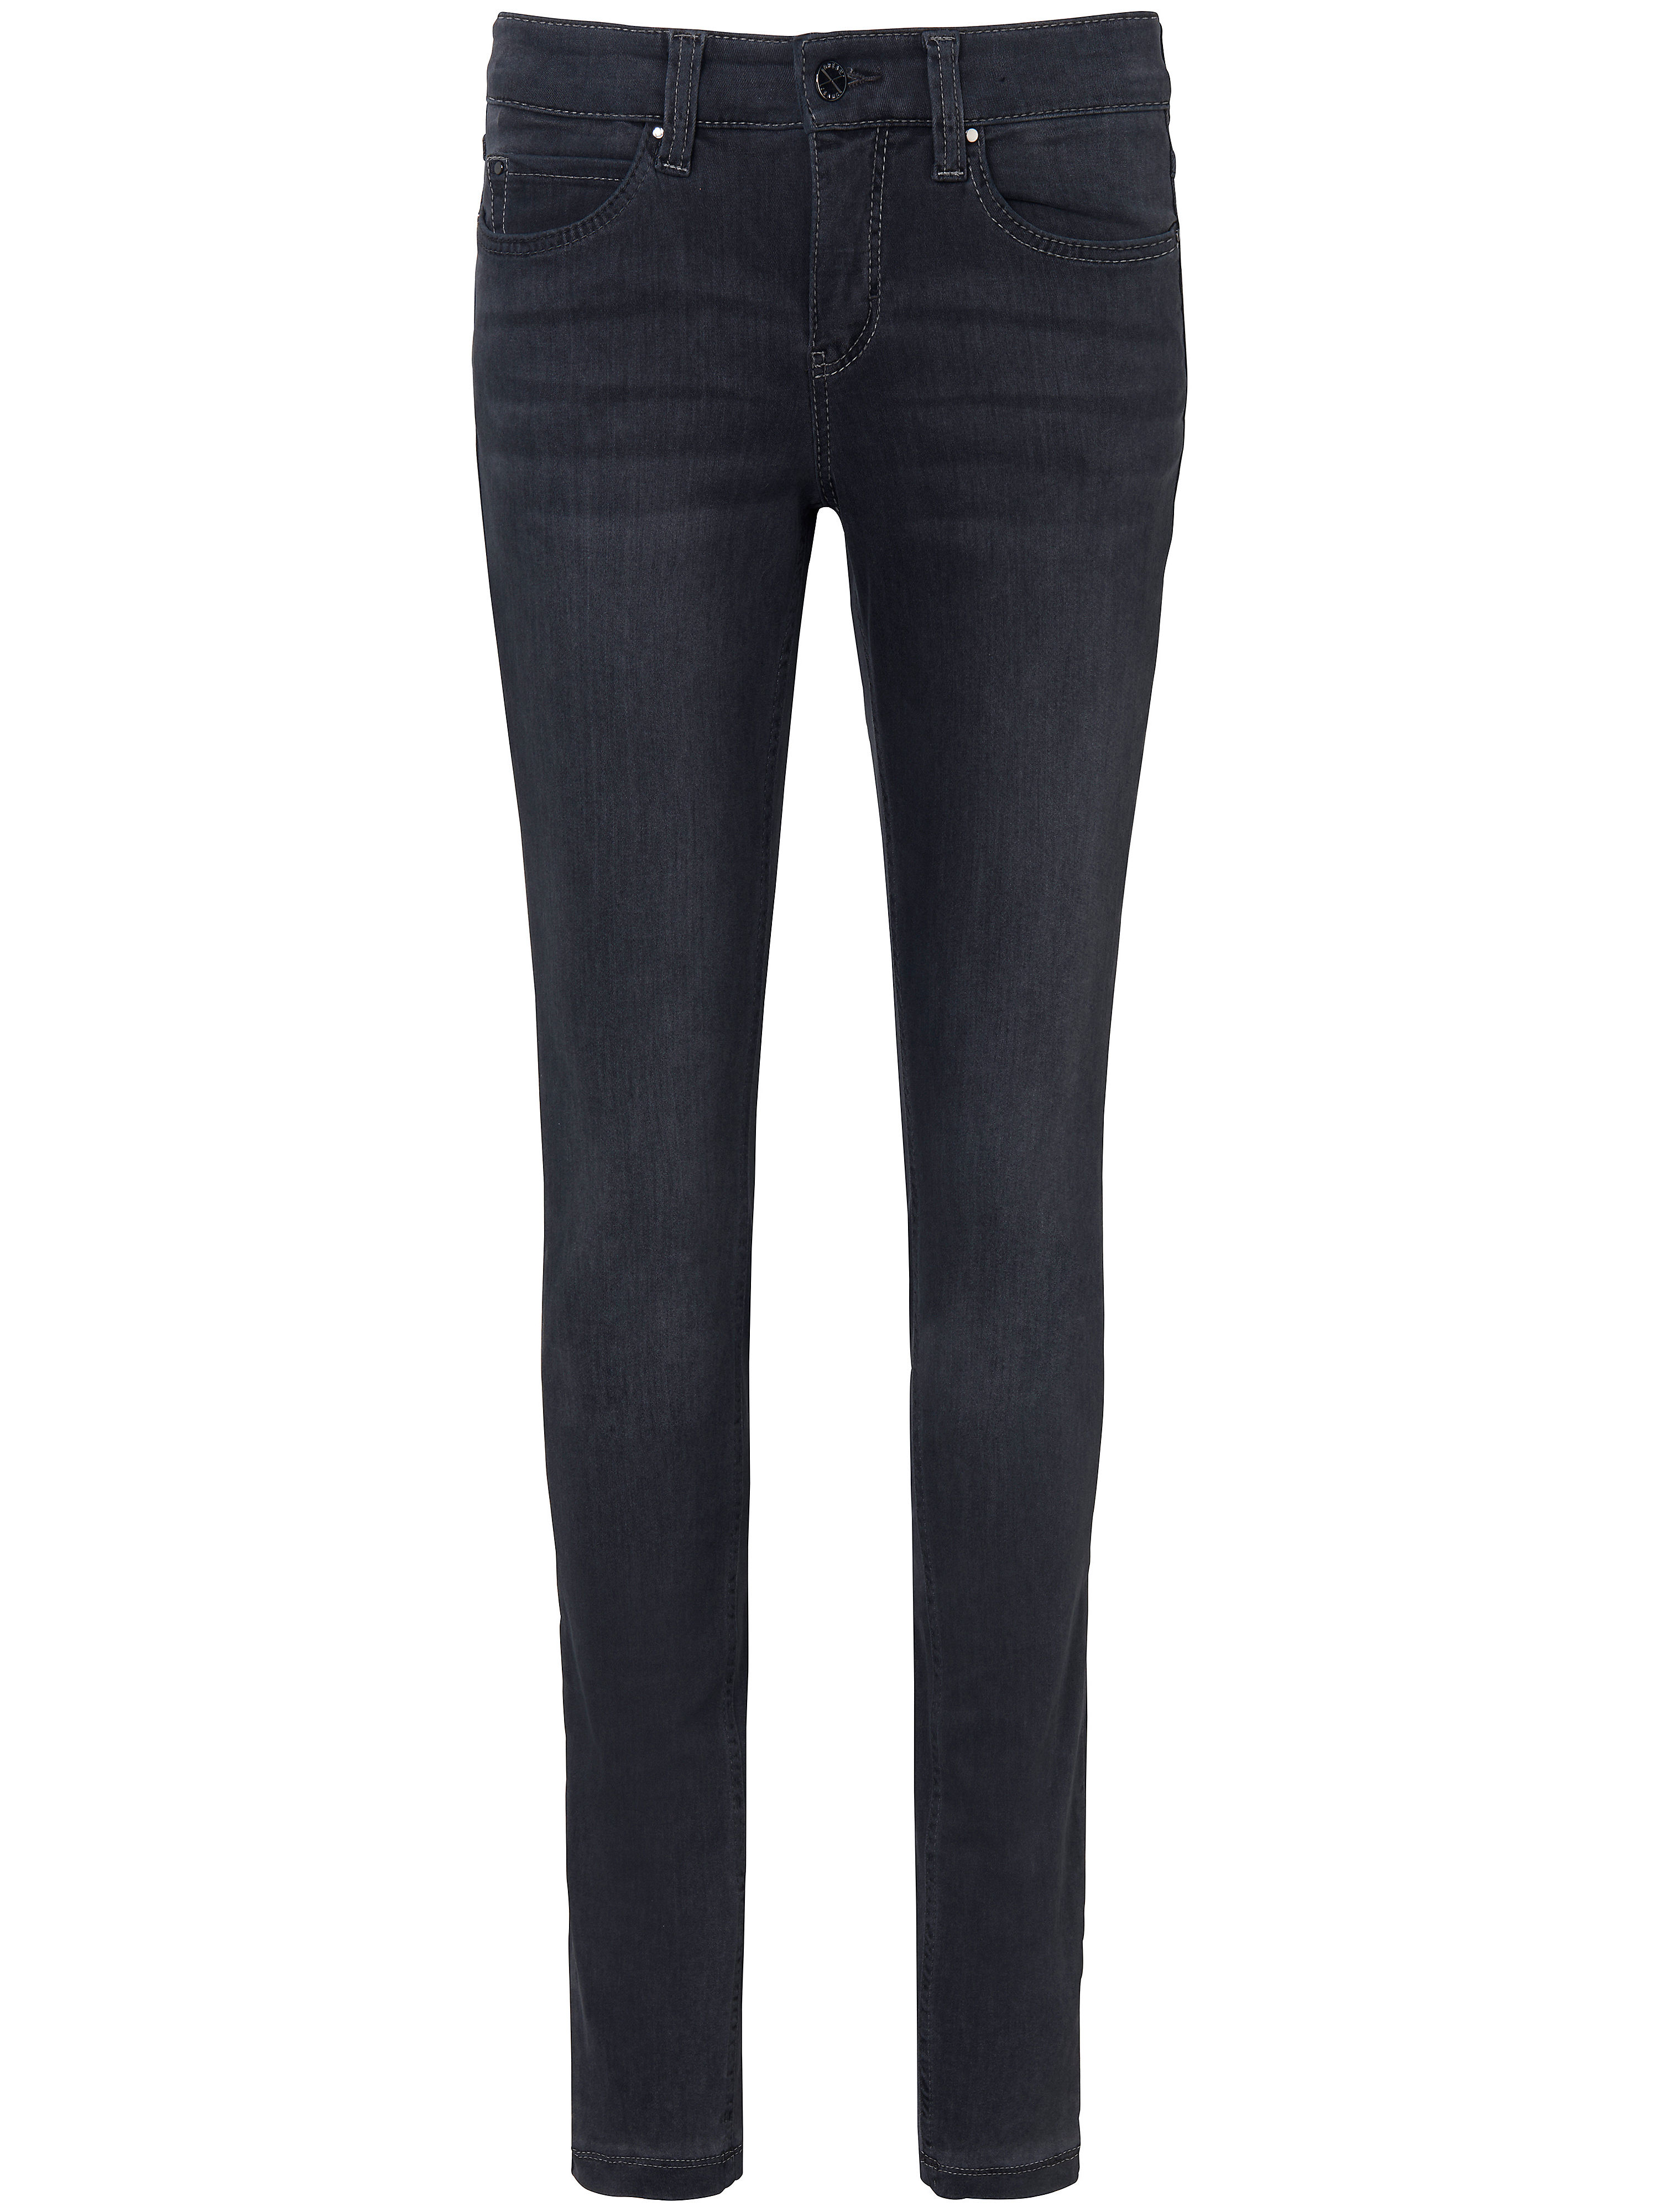 Mac - Dream skinny jeans 30 inch - blue blue